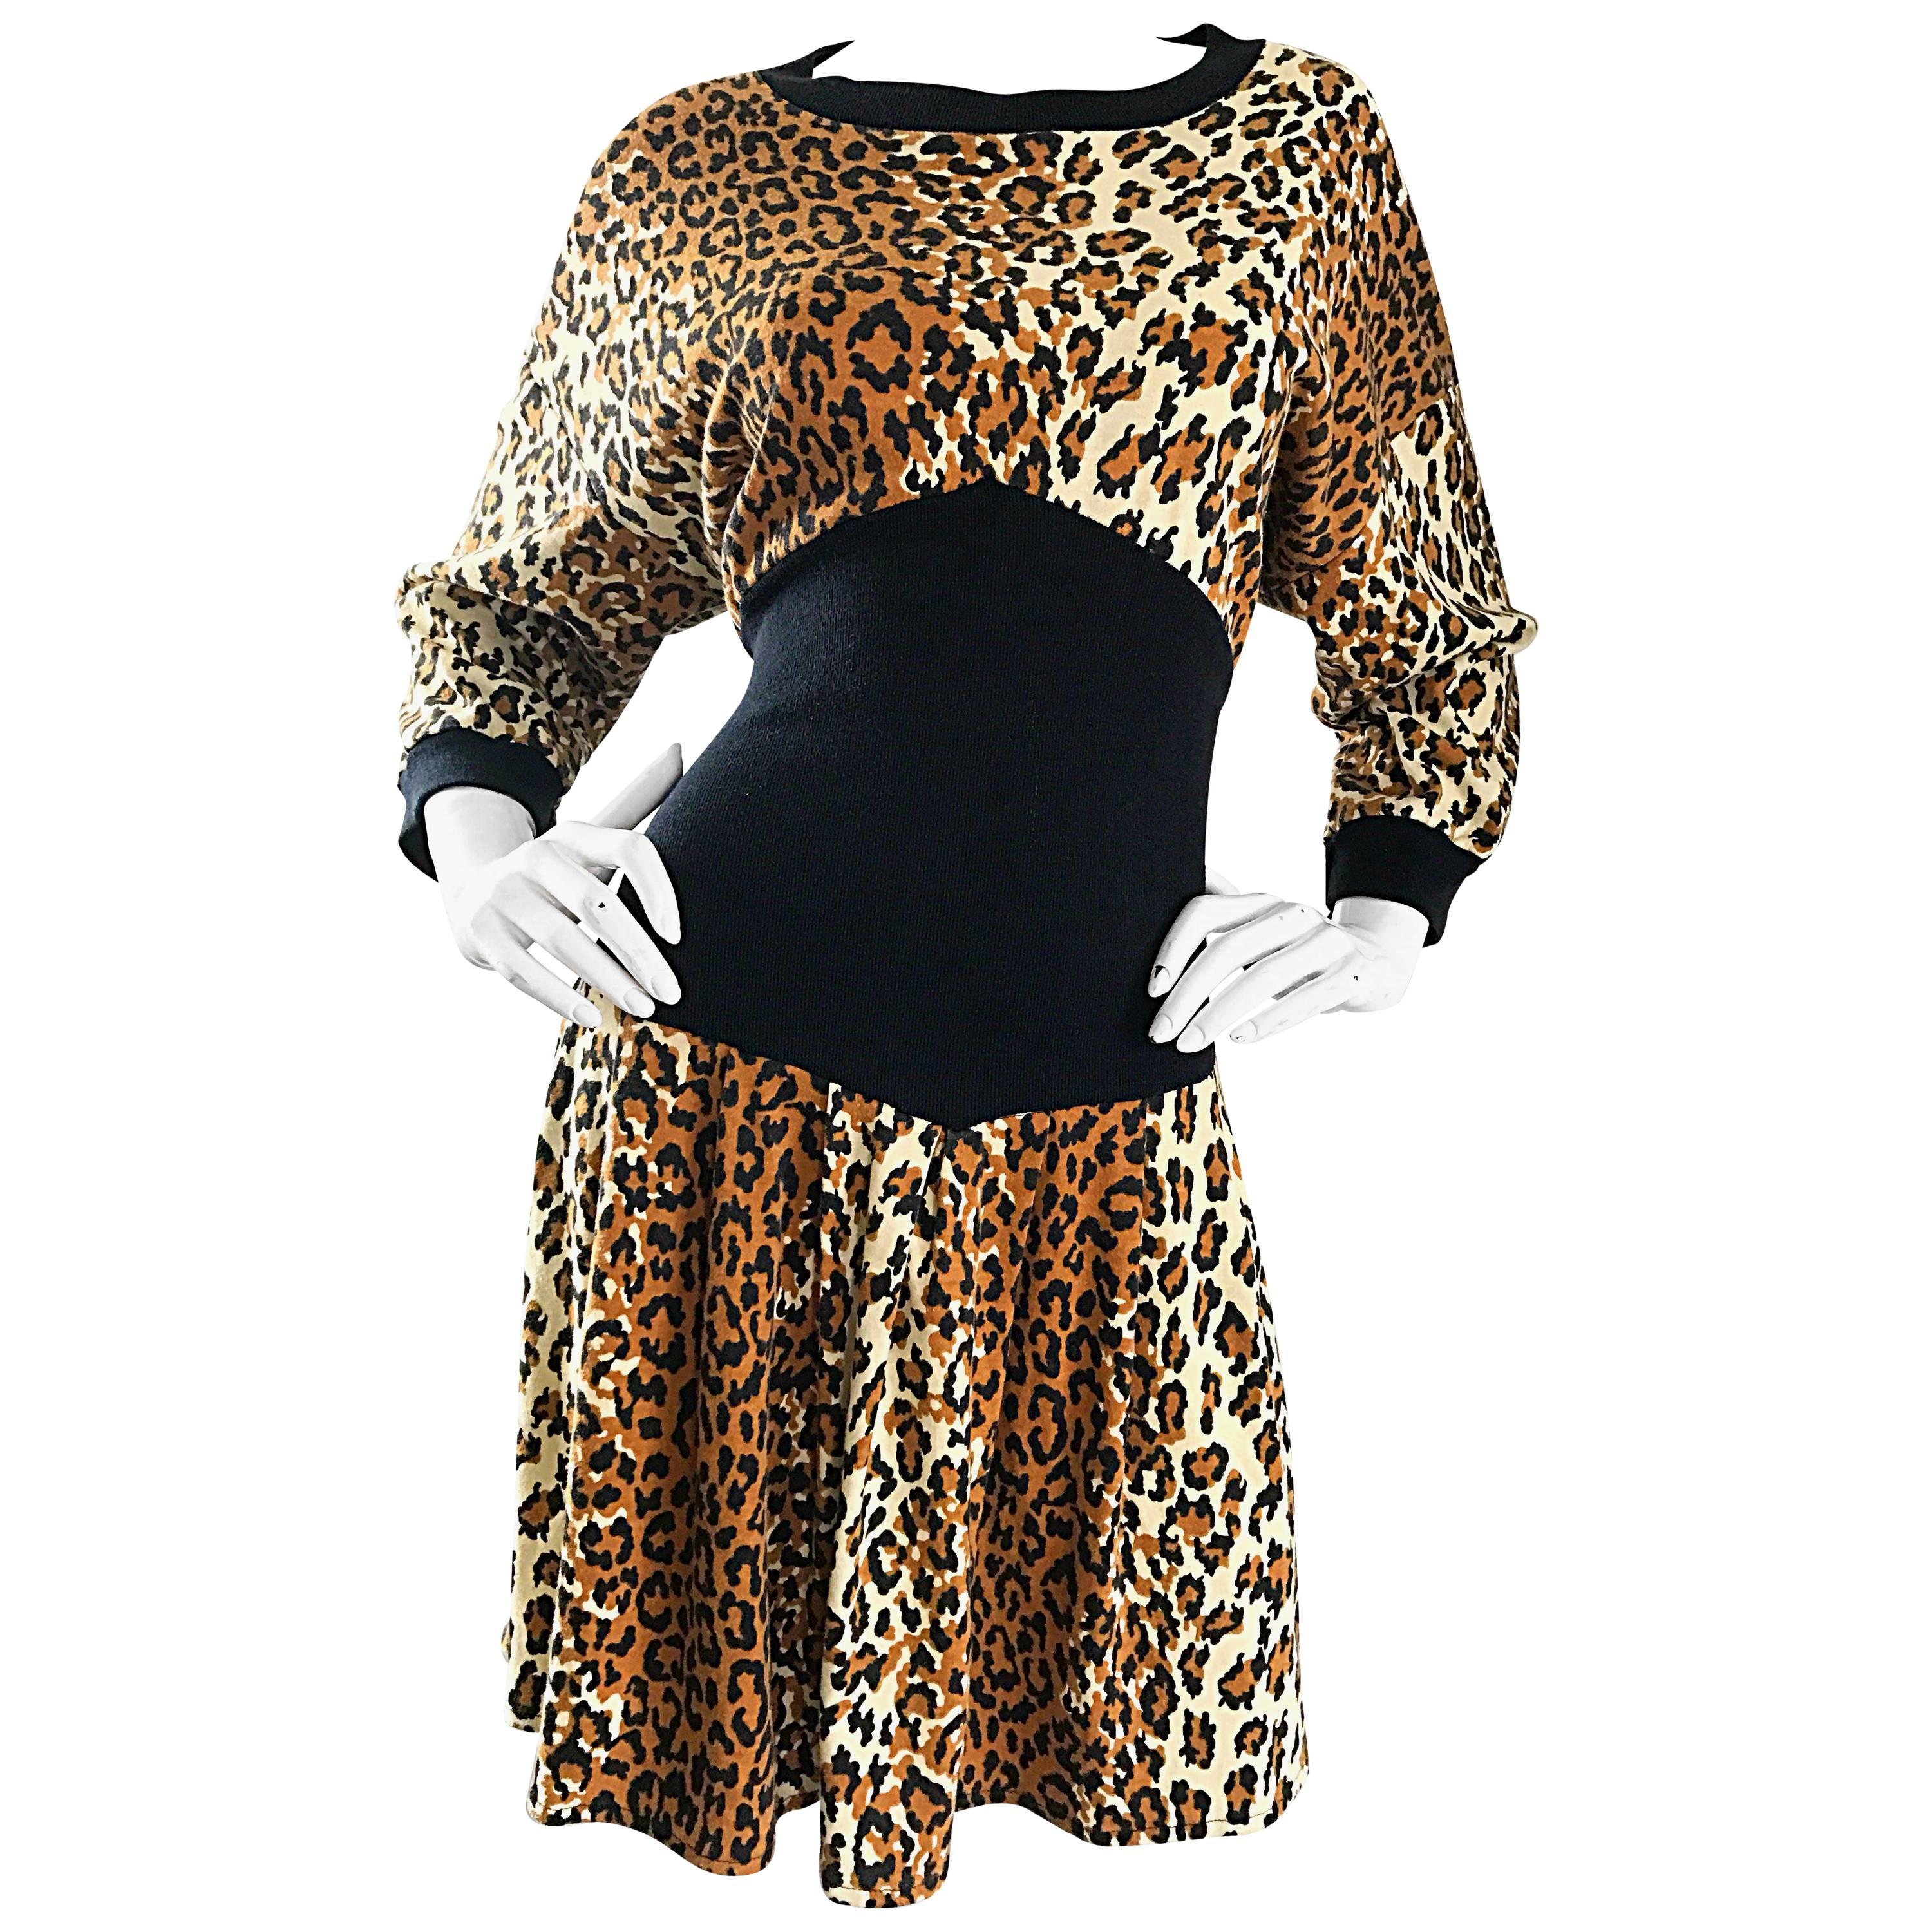 Amazing 1980s Leopard Cheetah Print Dolman Sleeve Vintage 80s Sweatshirt Dress For Sale